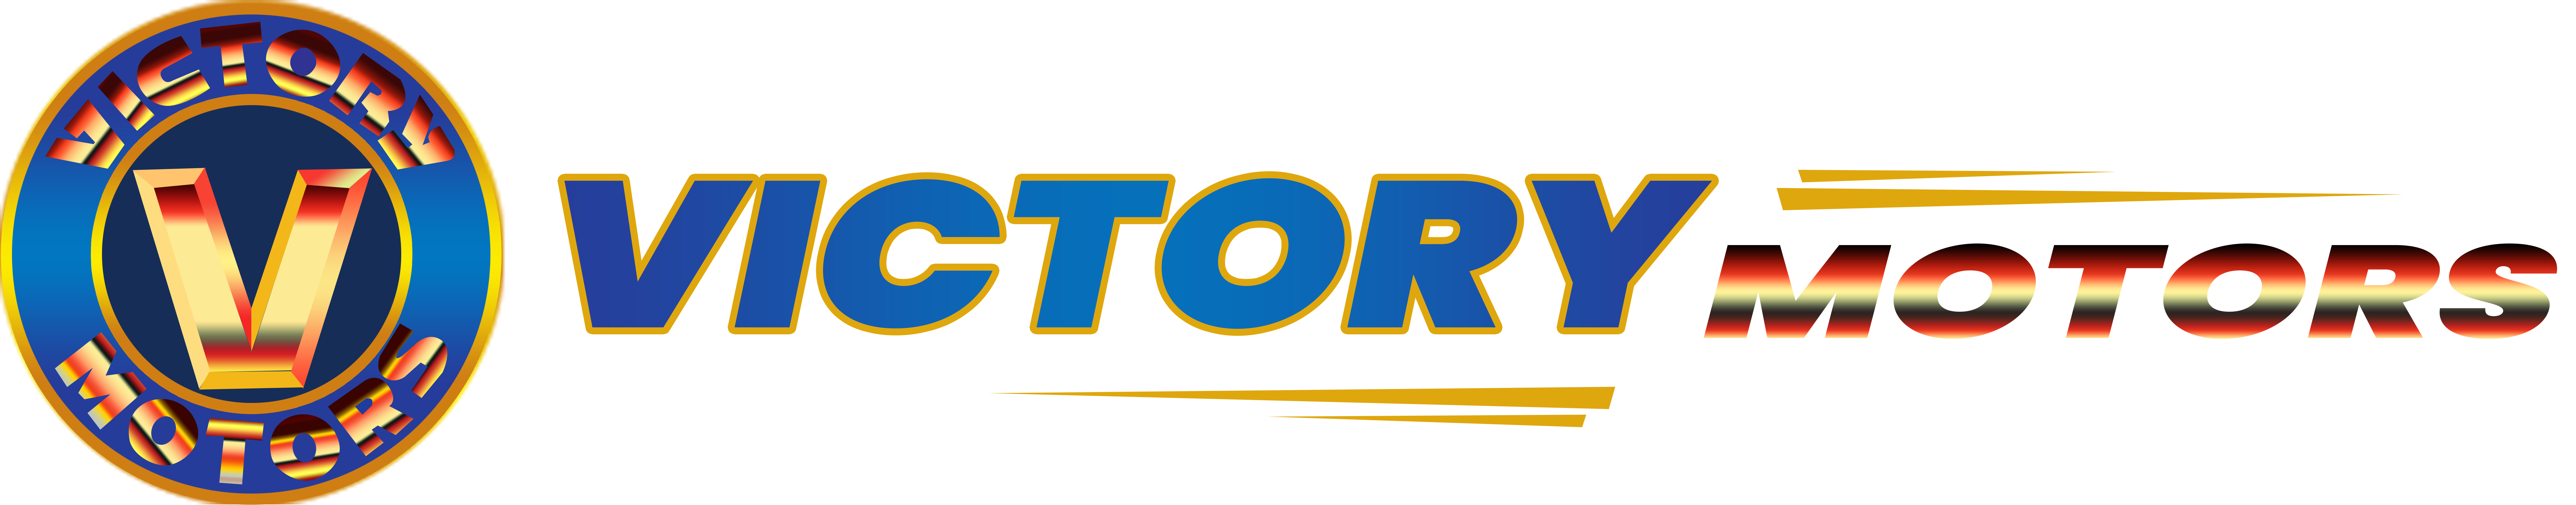 Victory Motors logo